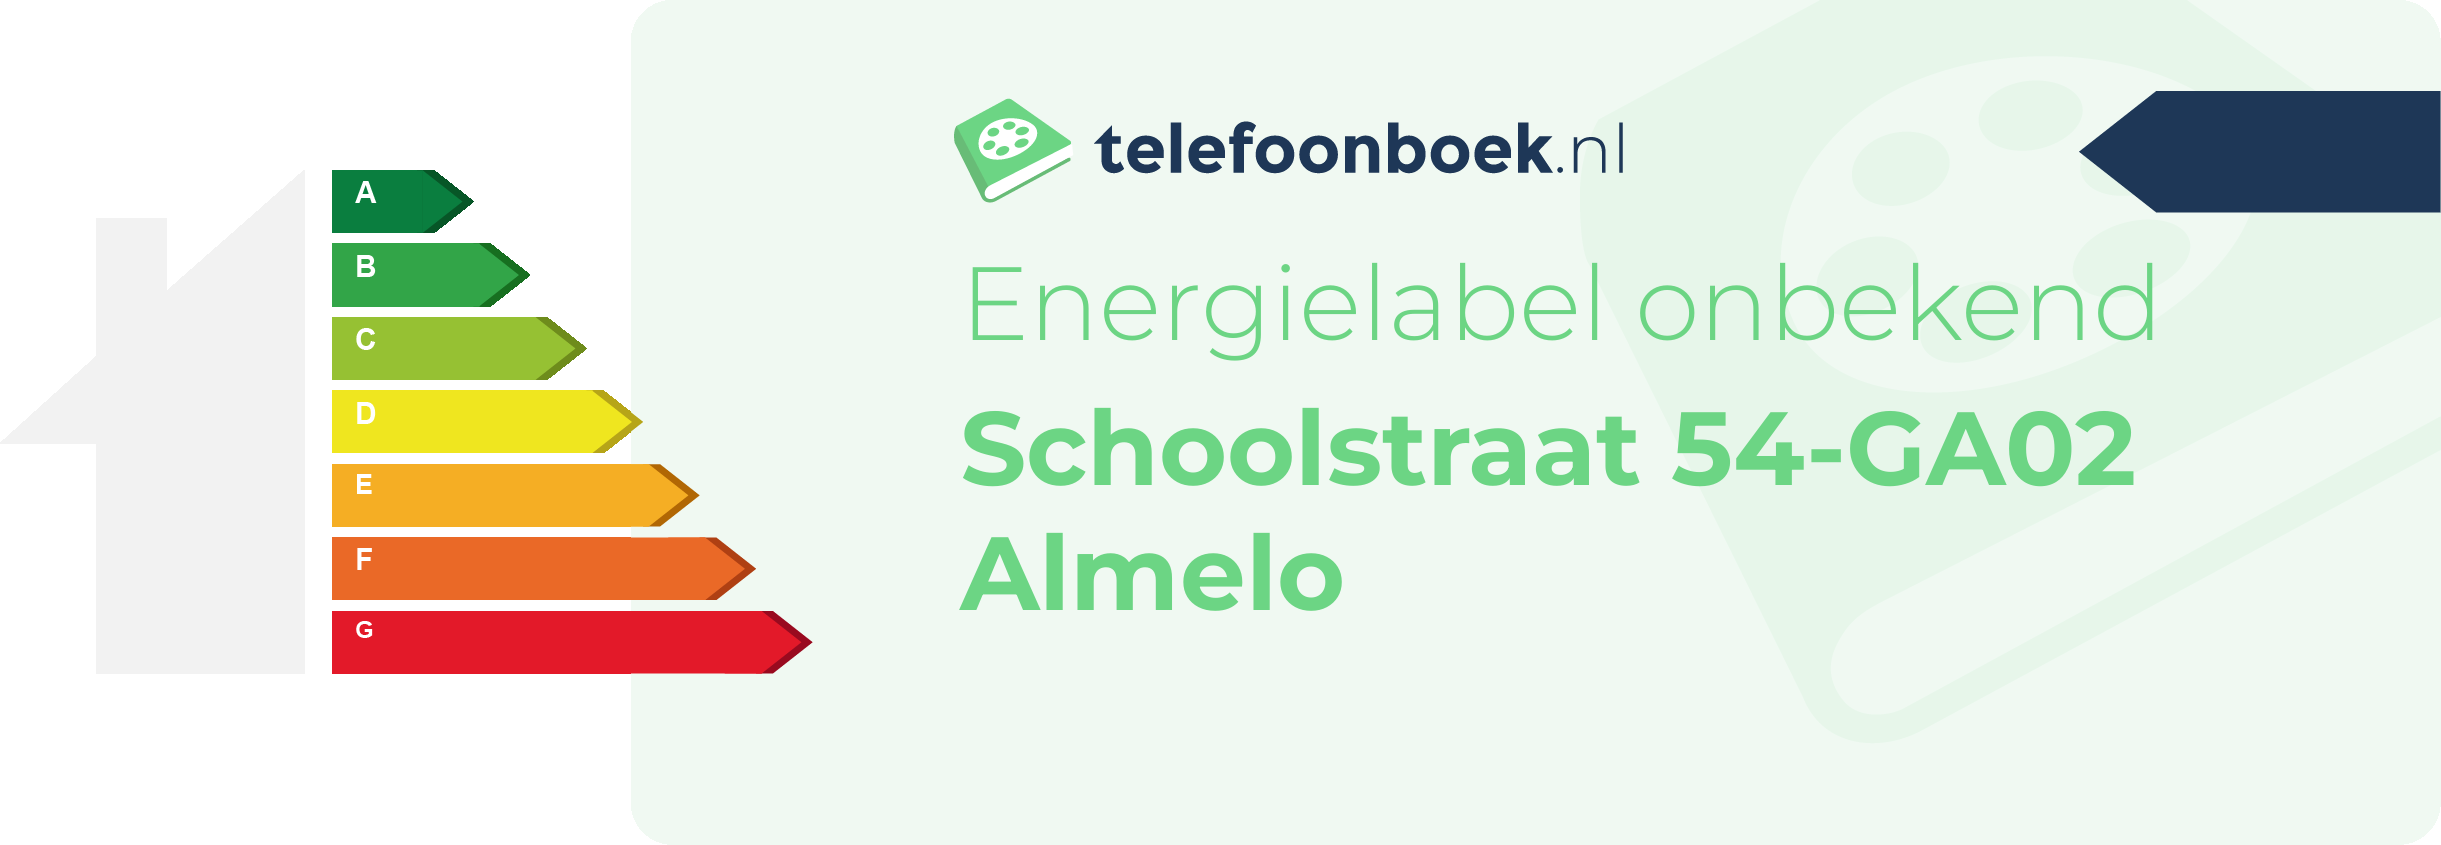 Energielabel Schoolstraat 54-GA02 Almelo